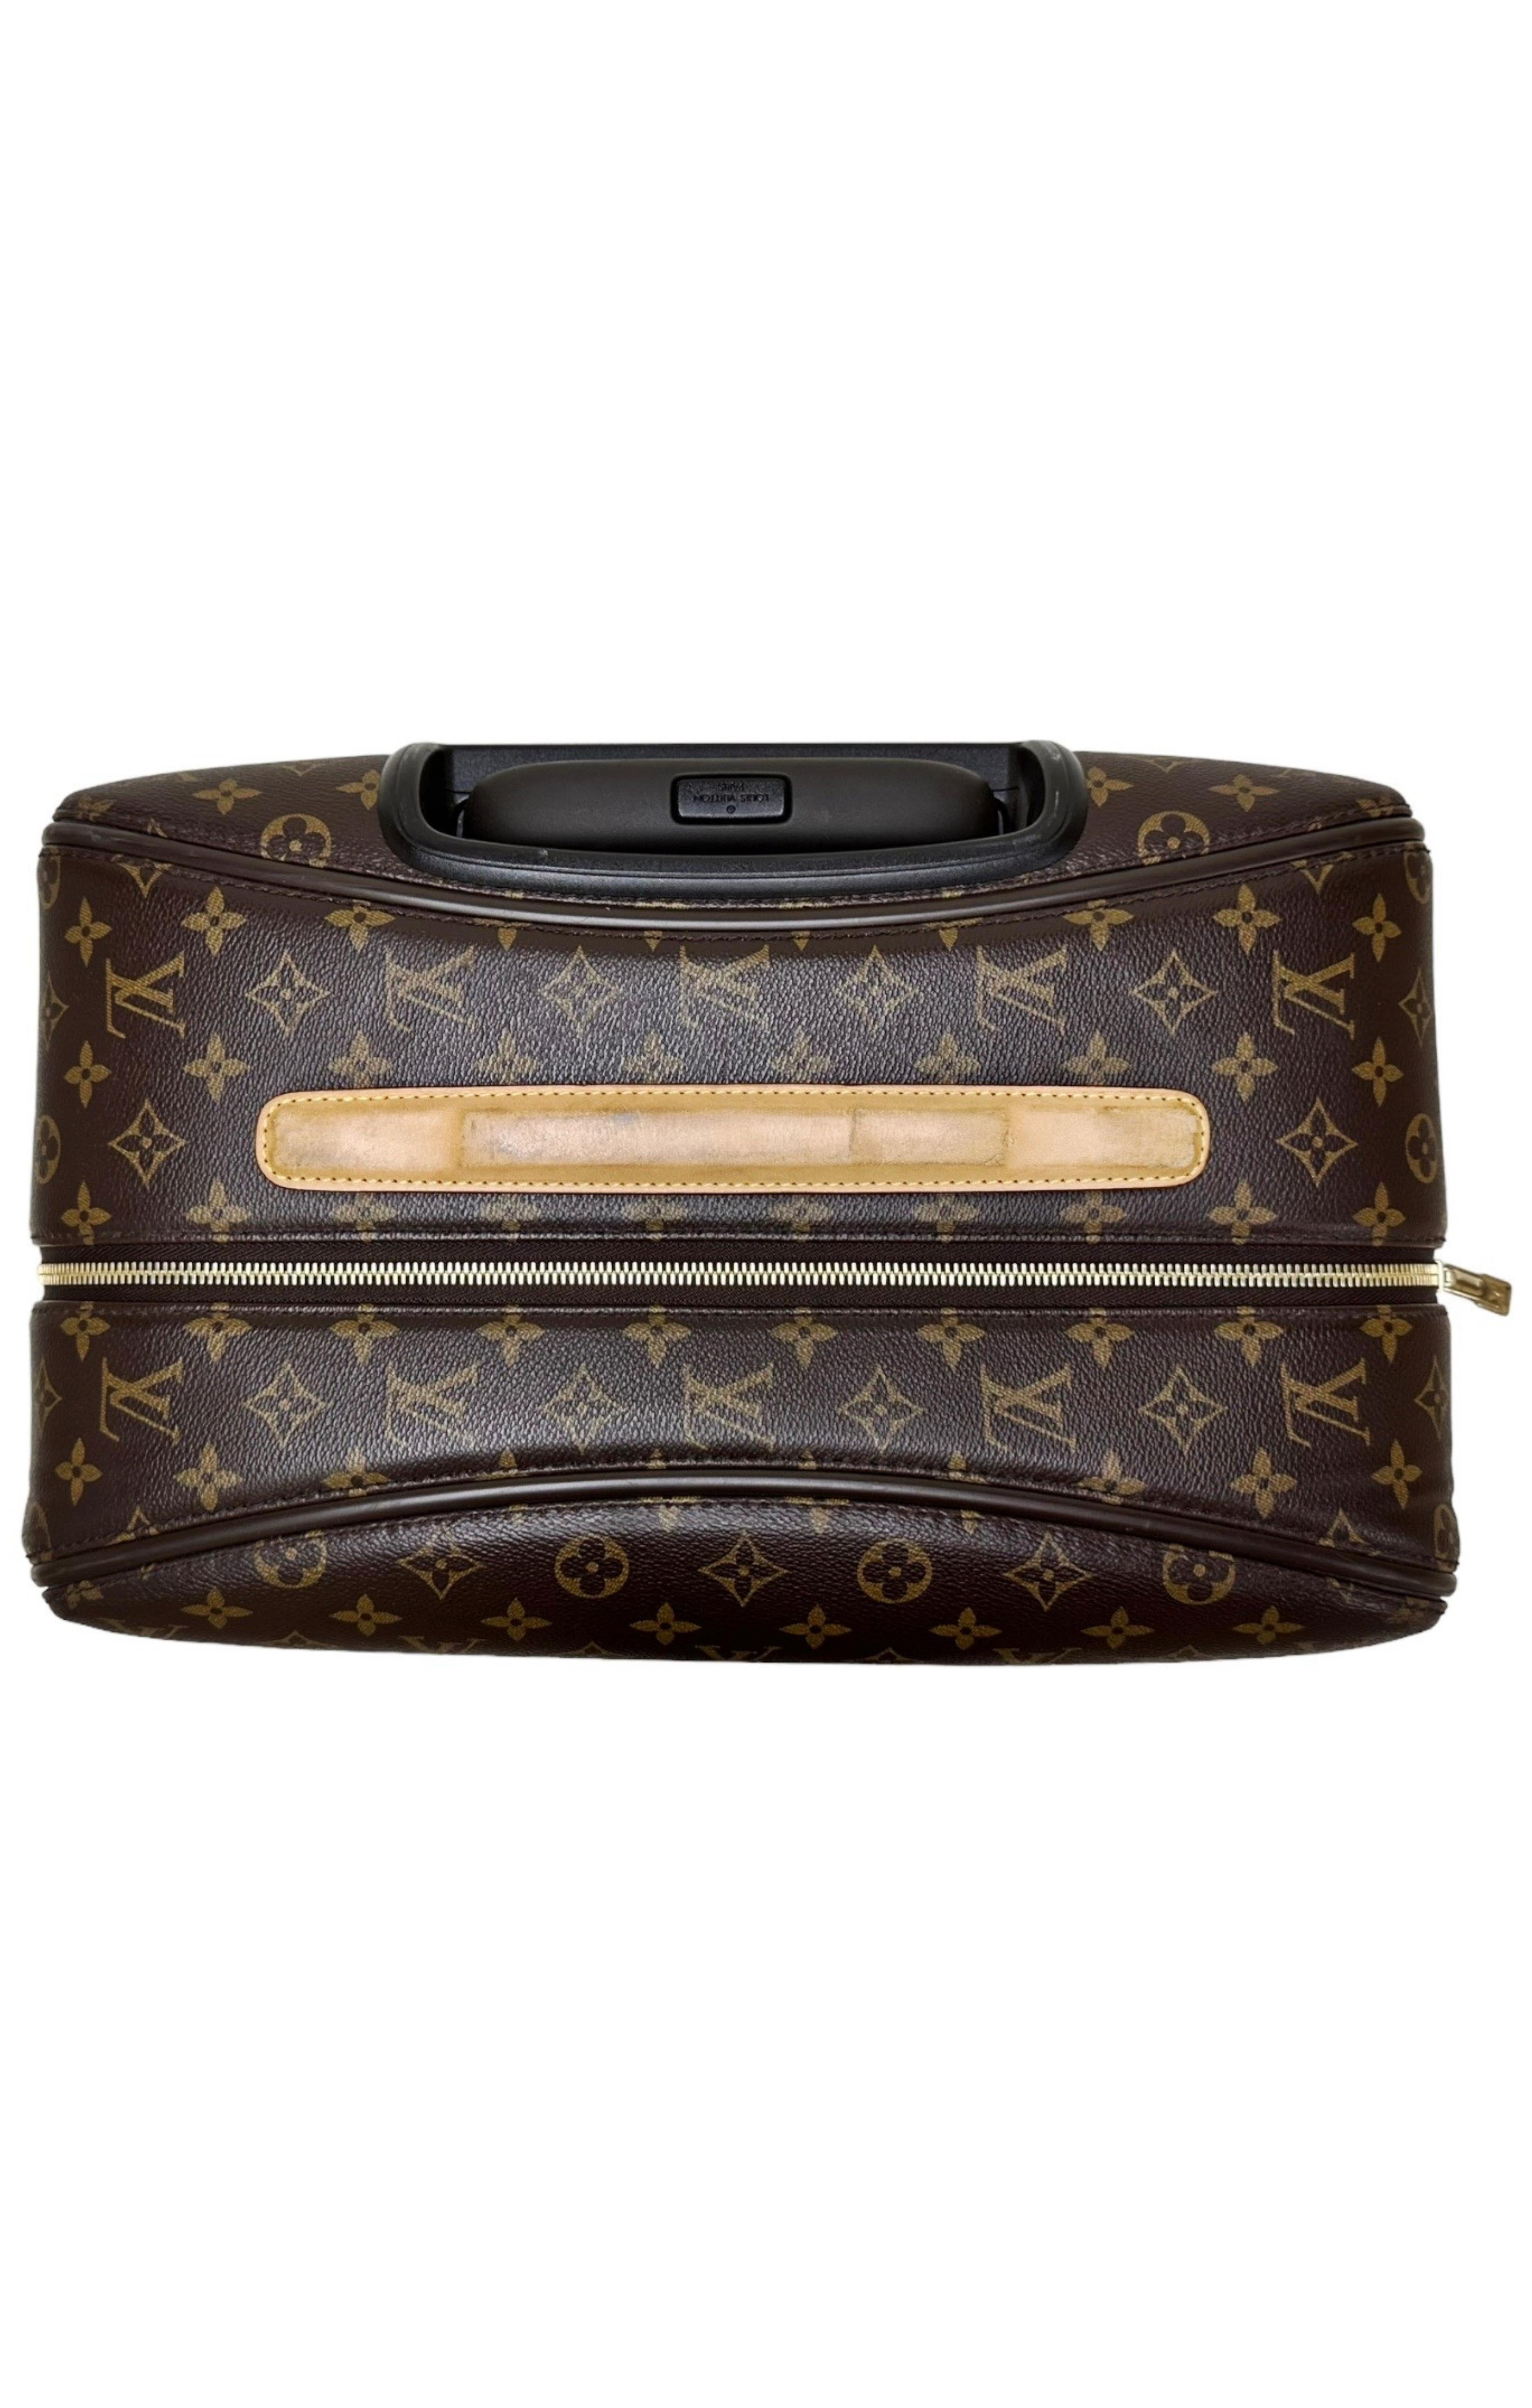 10 Pcs Louis Vuitton Luggage